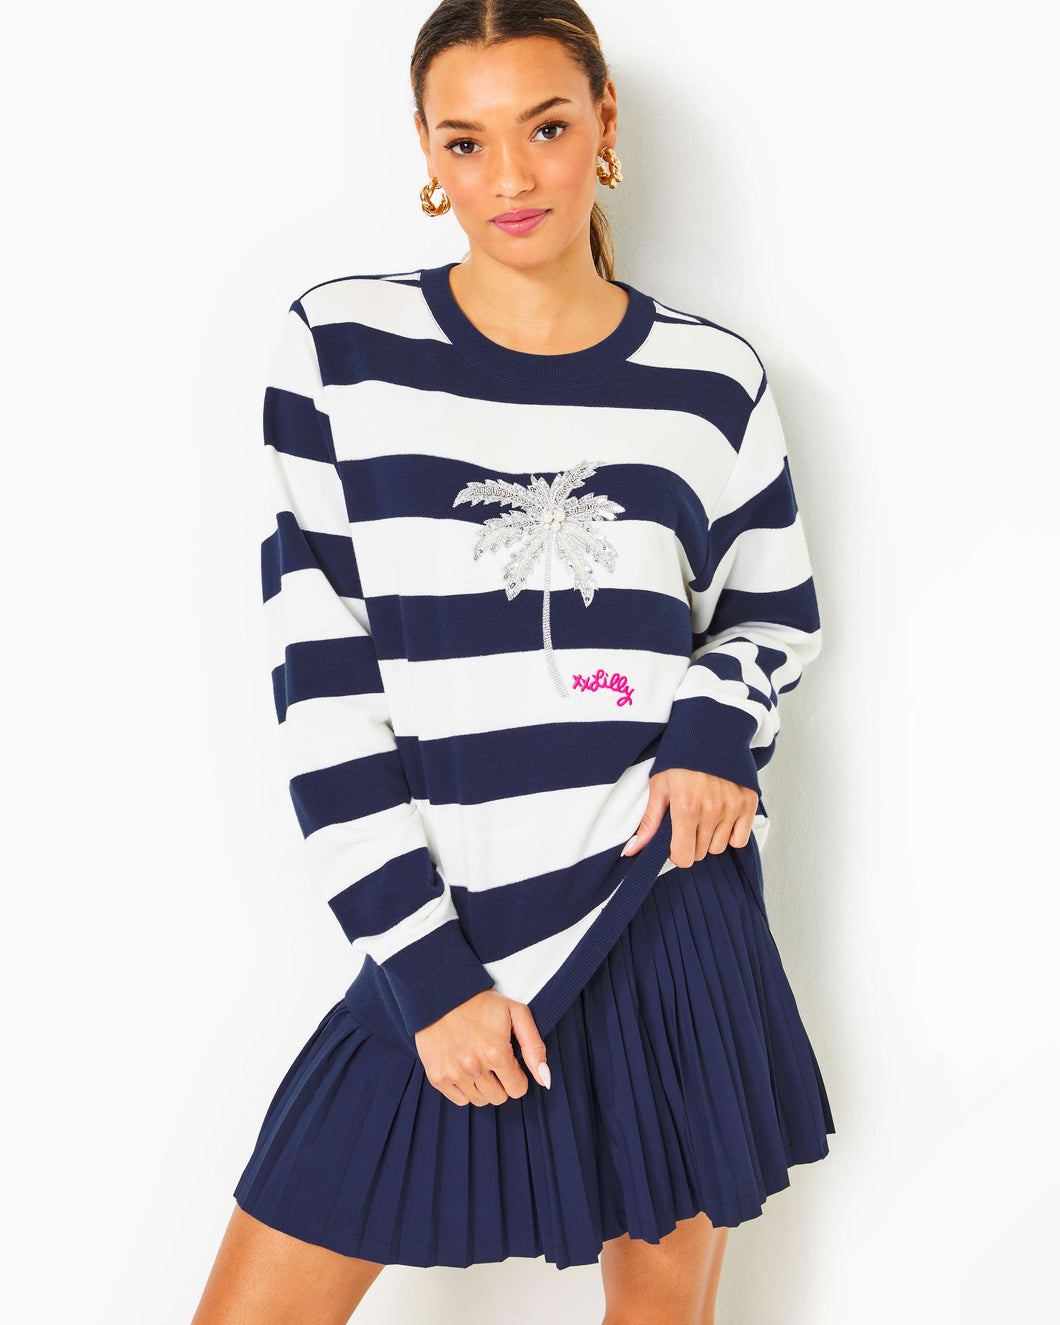 Ballad Cotton Sweatshirt - Low Tide Navy Palm Tree Embellished Graphic